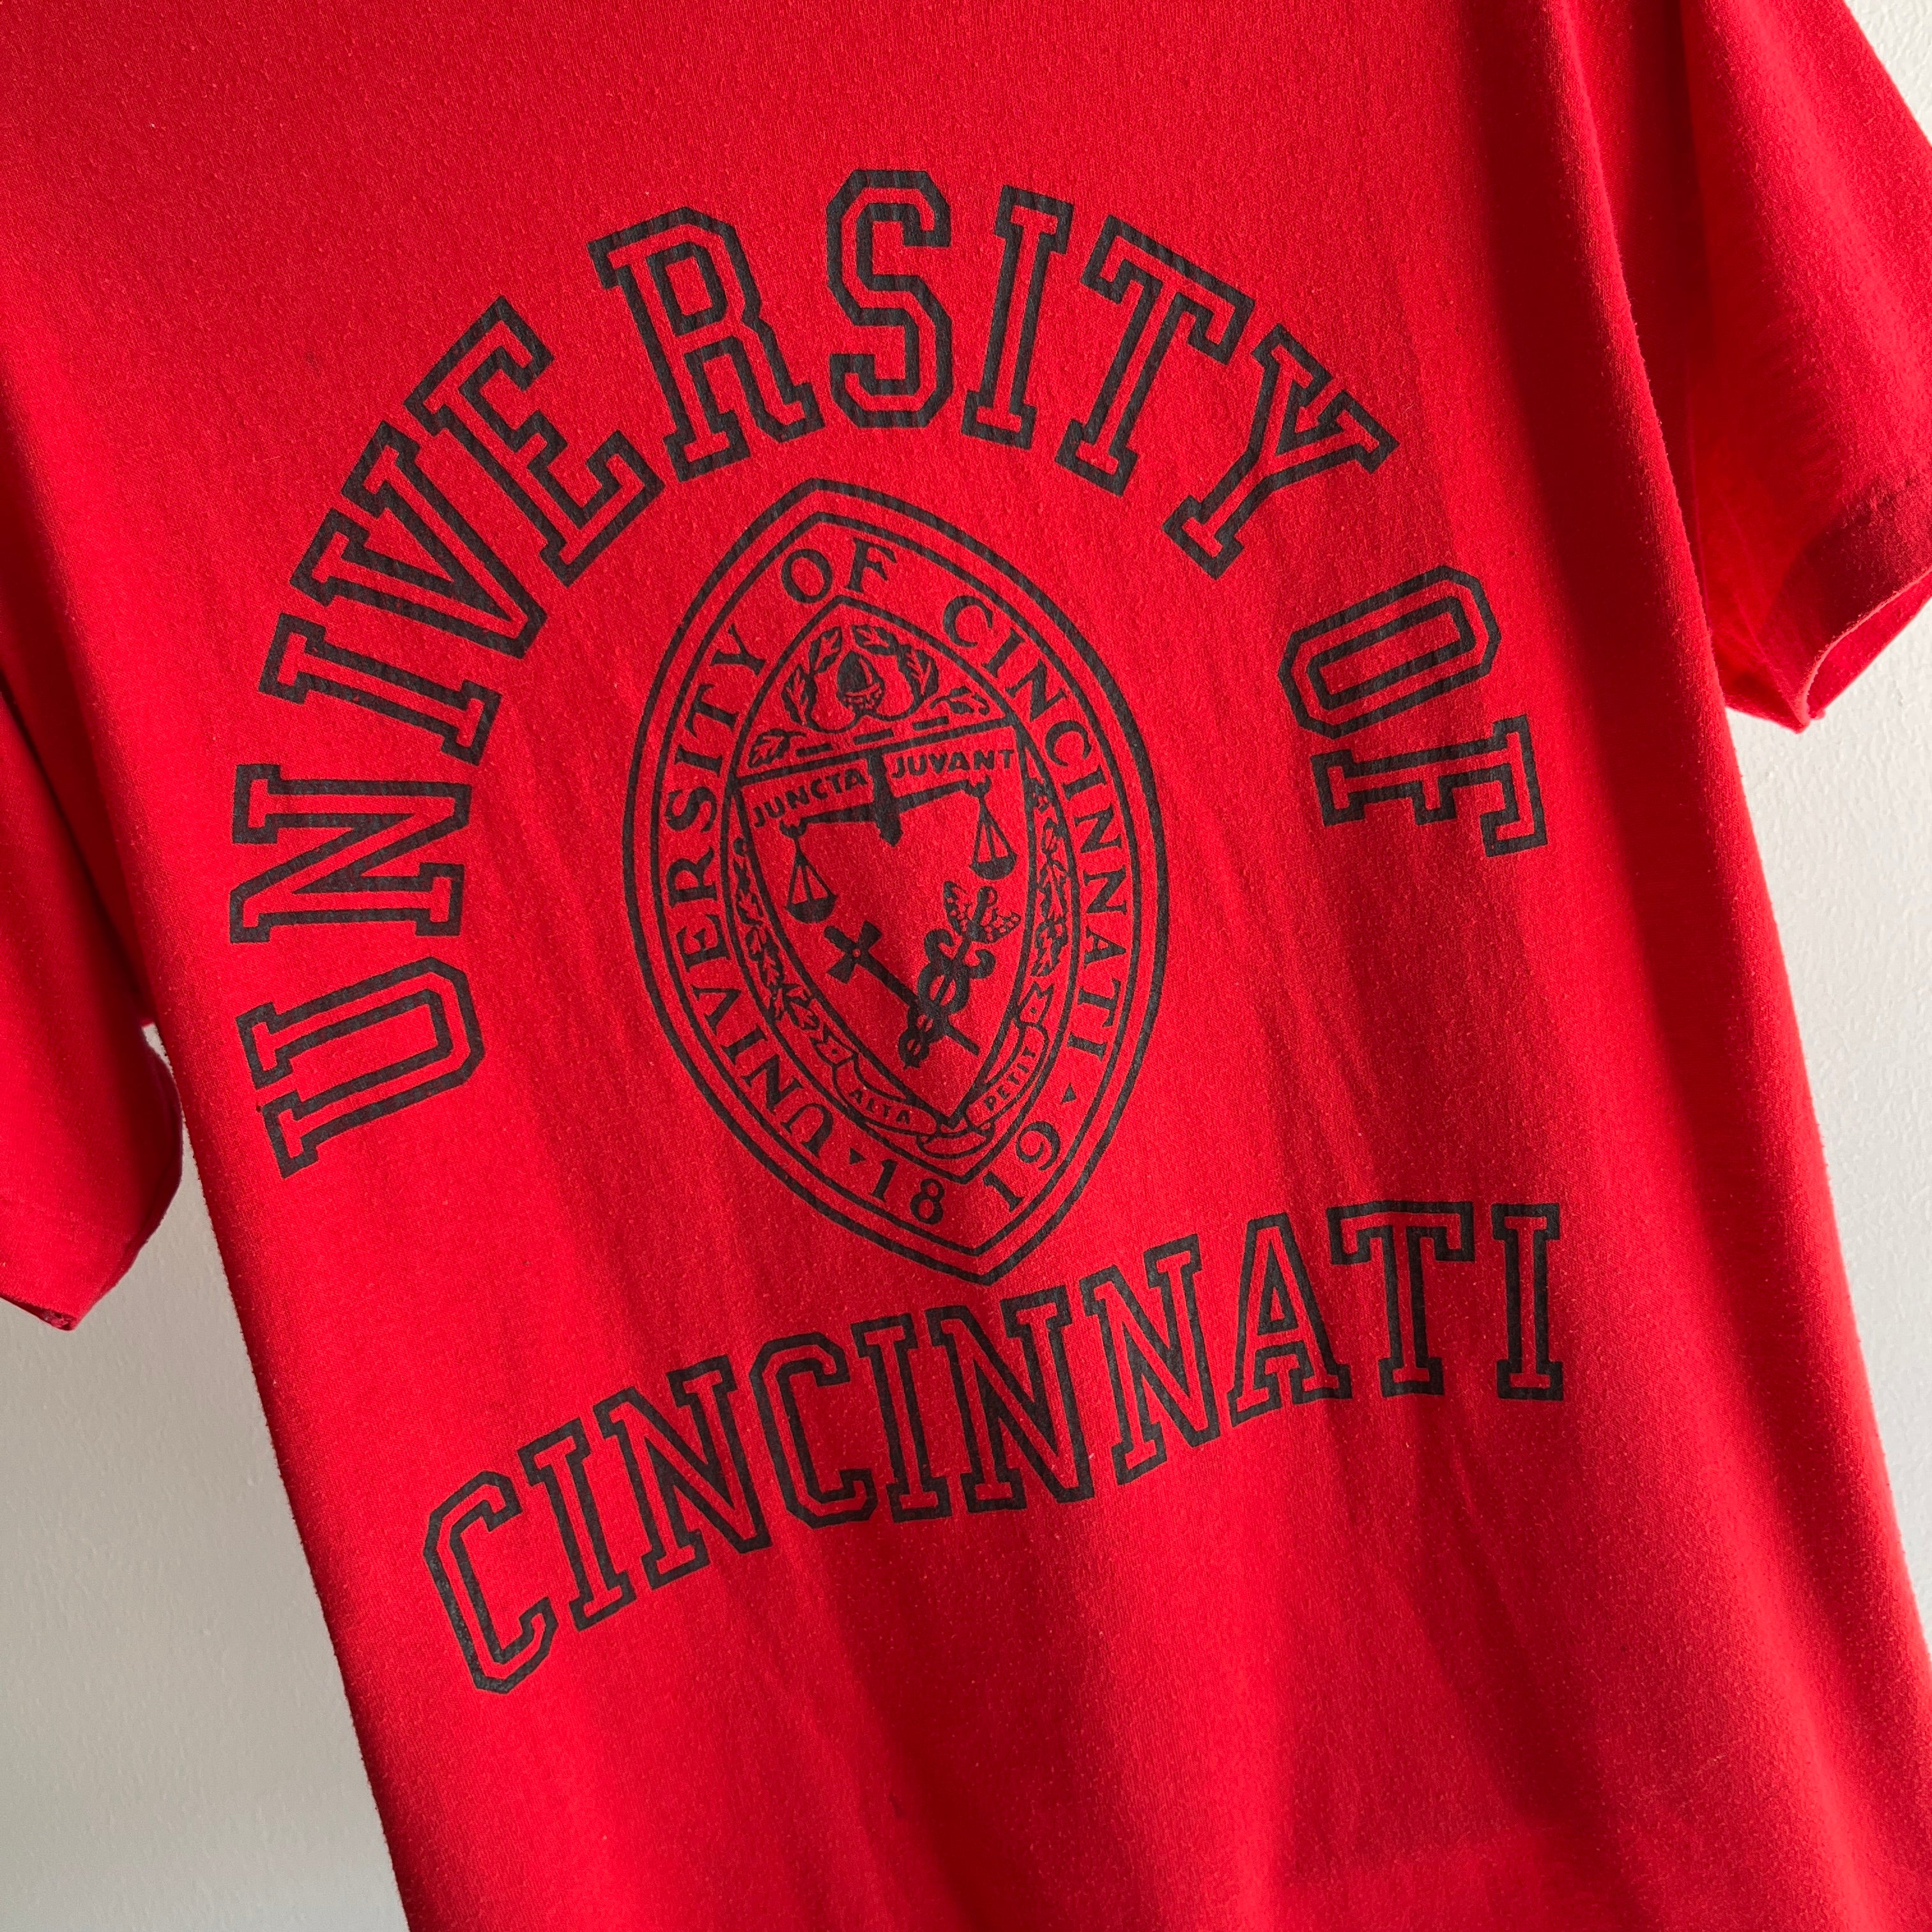 1980s University of Cincinatti T-Shirt